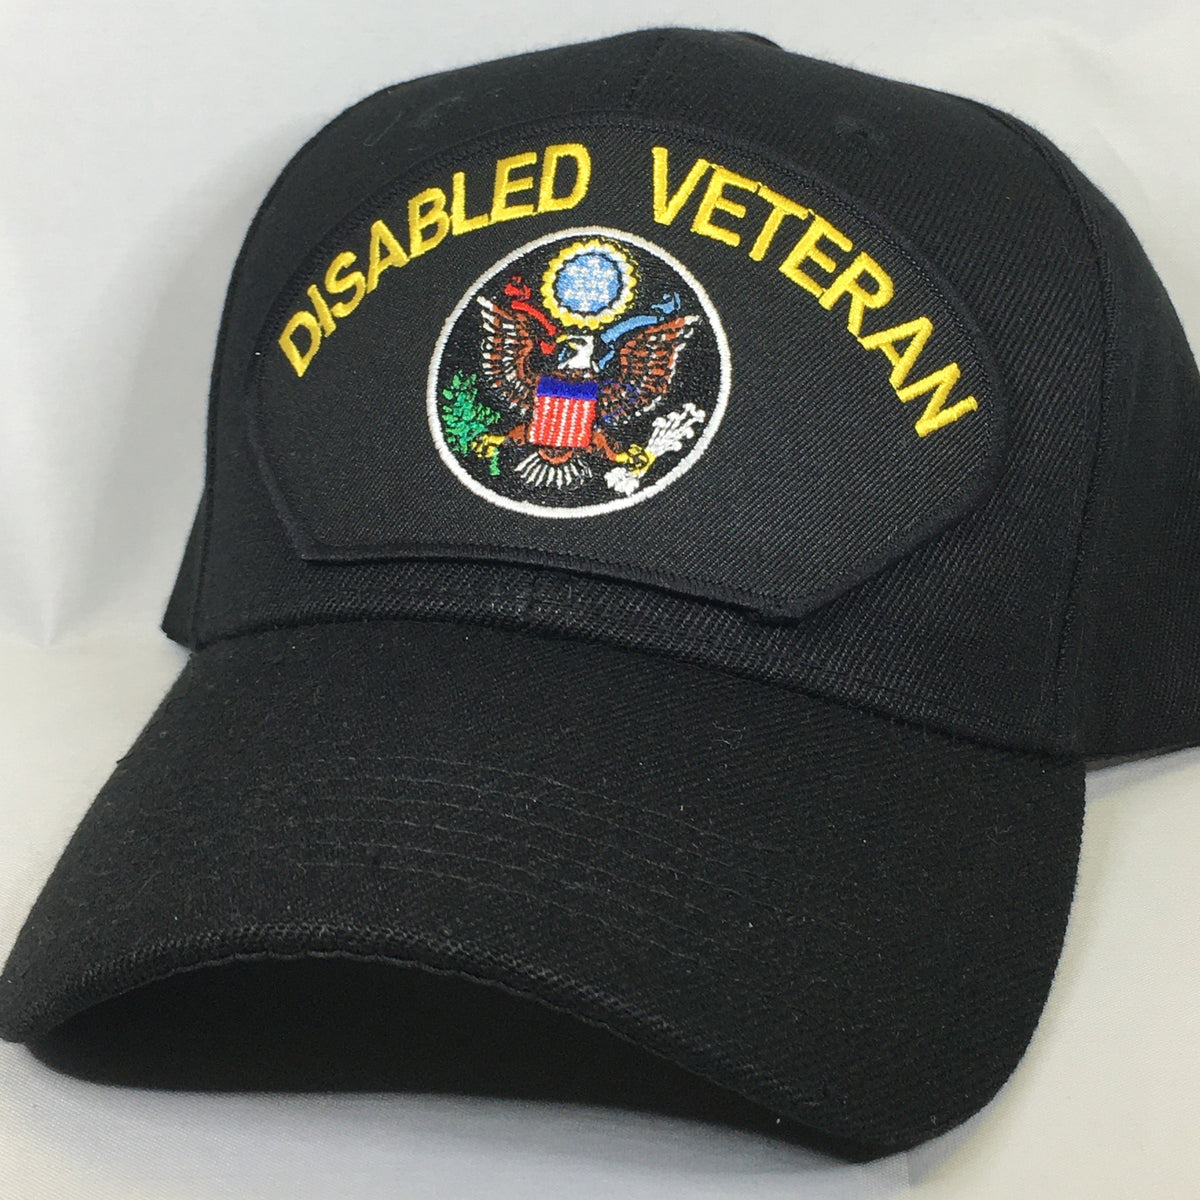 Disabled Veteran Cap